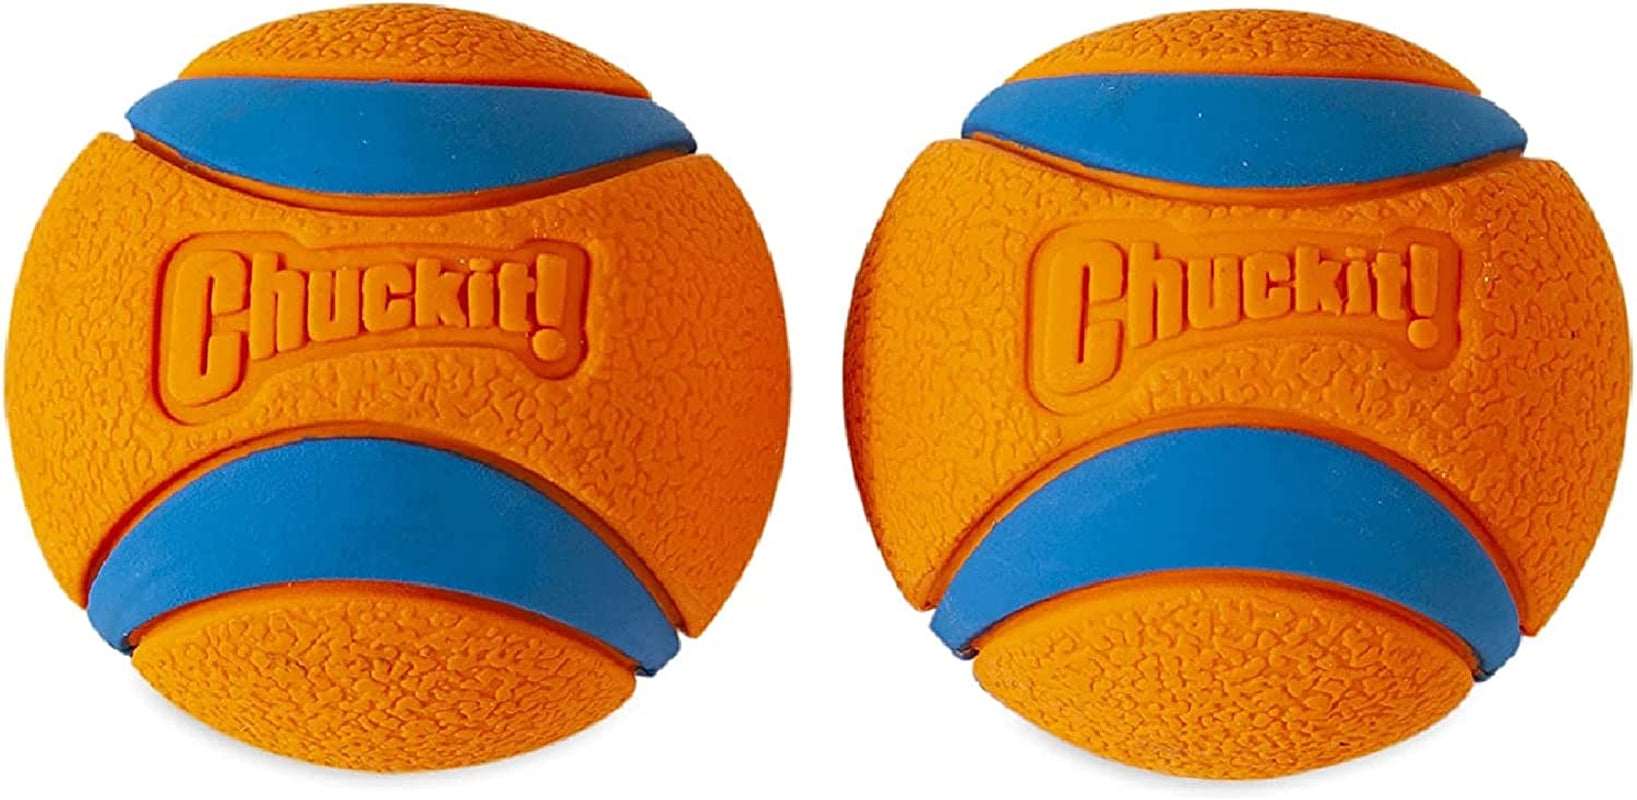  Ball Dog Toy